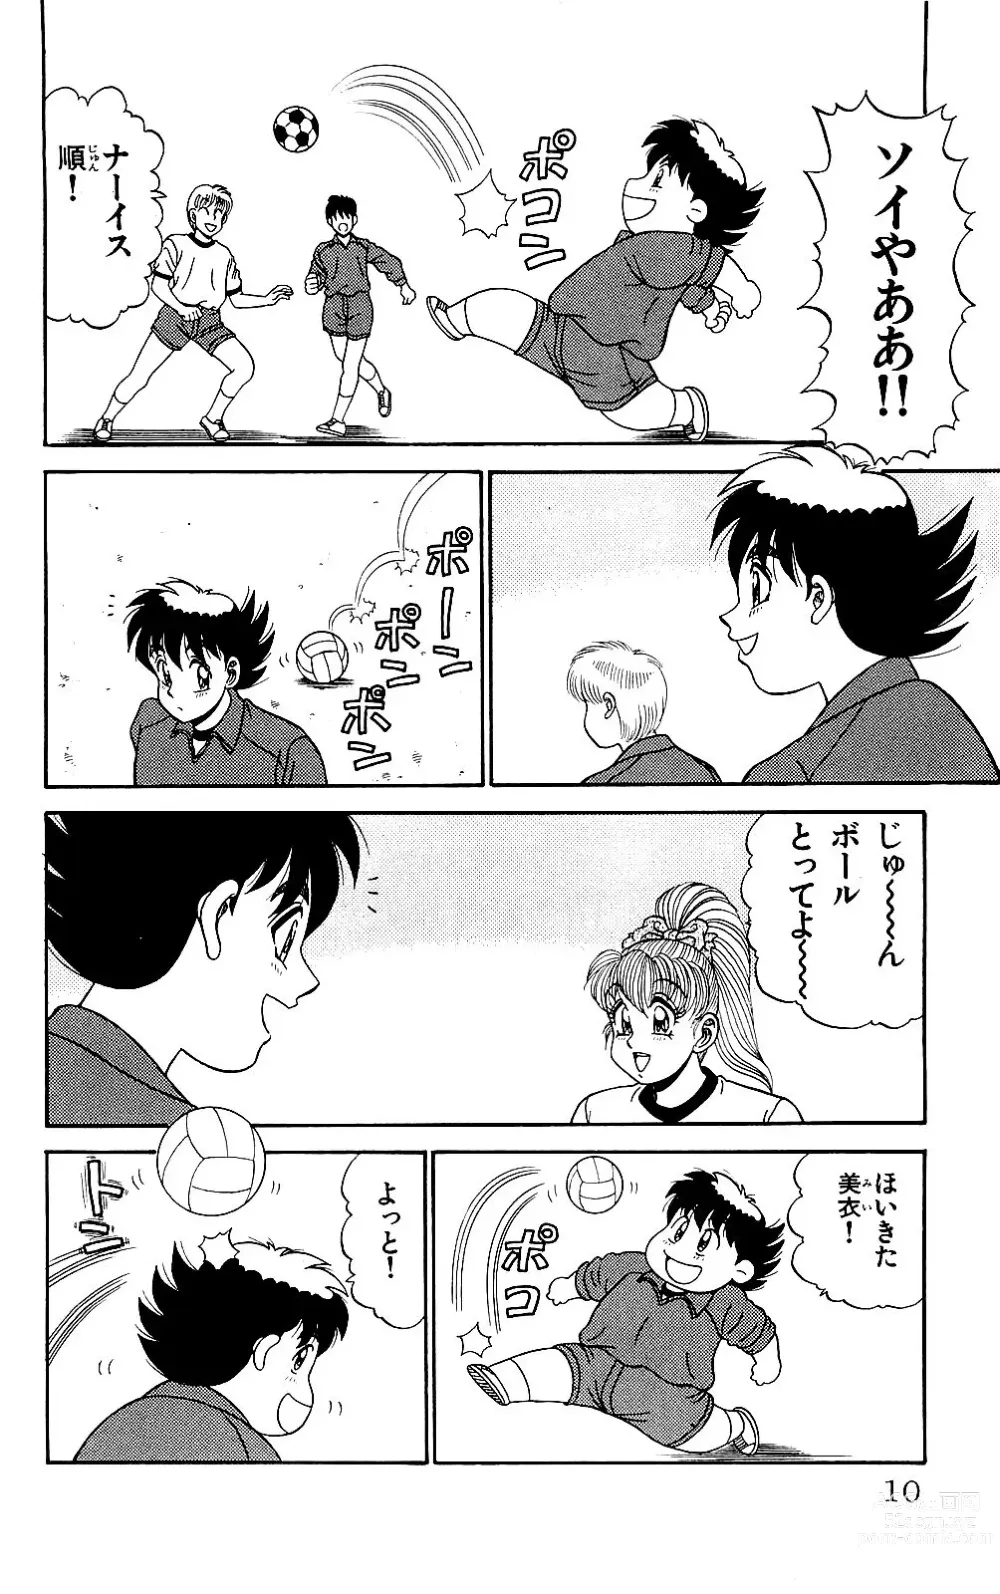 Page 8 of manga Orette Piyoritan 05